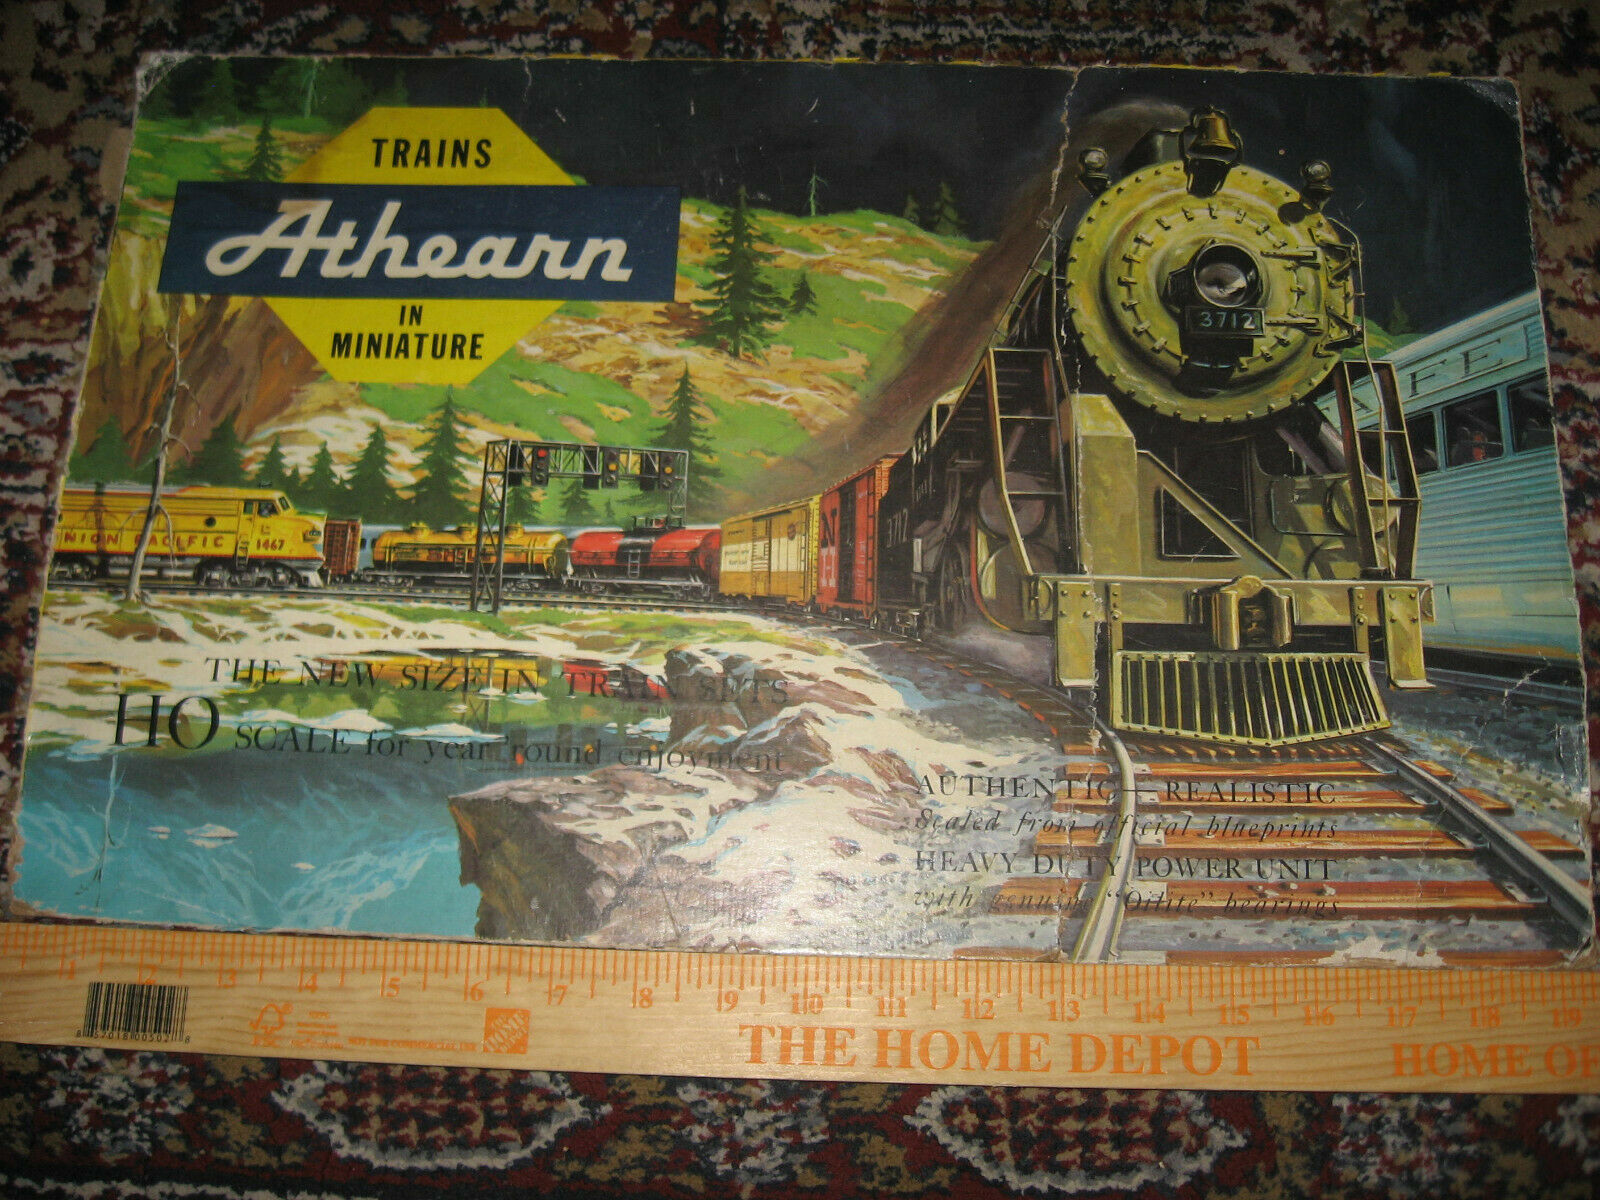 Athearn Trains In Miniature Ho Scale Top Box Art 19x12"